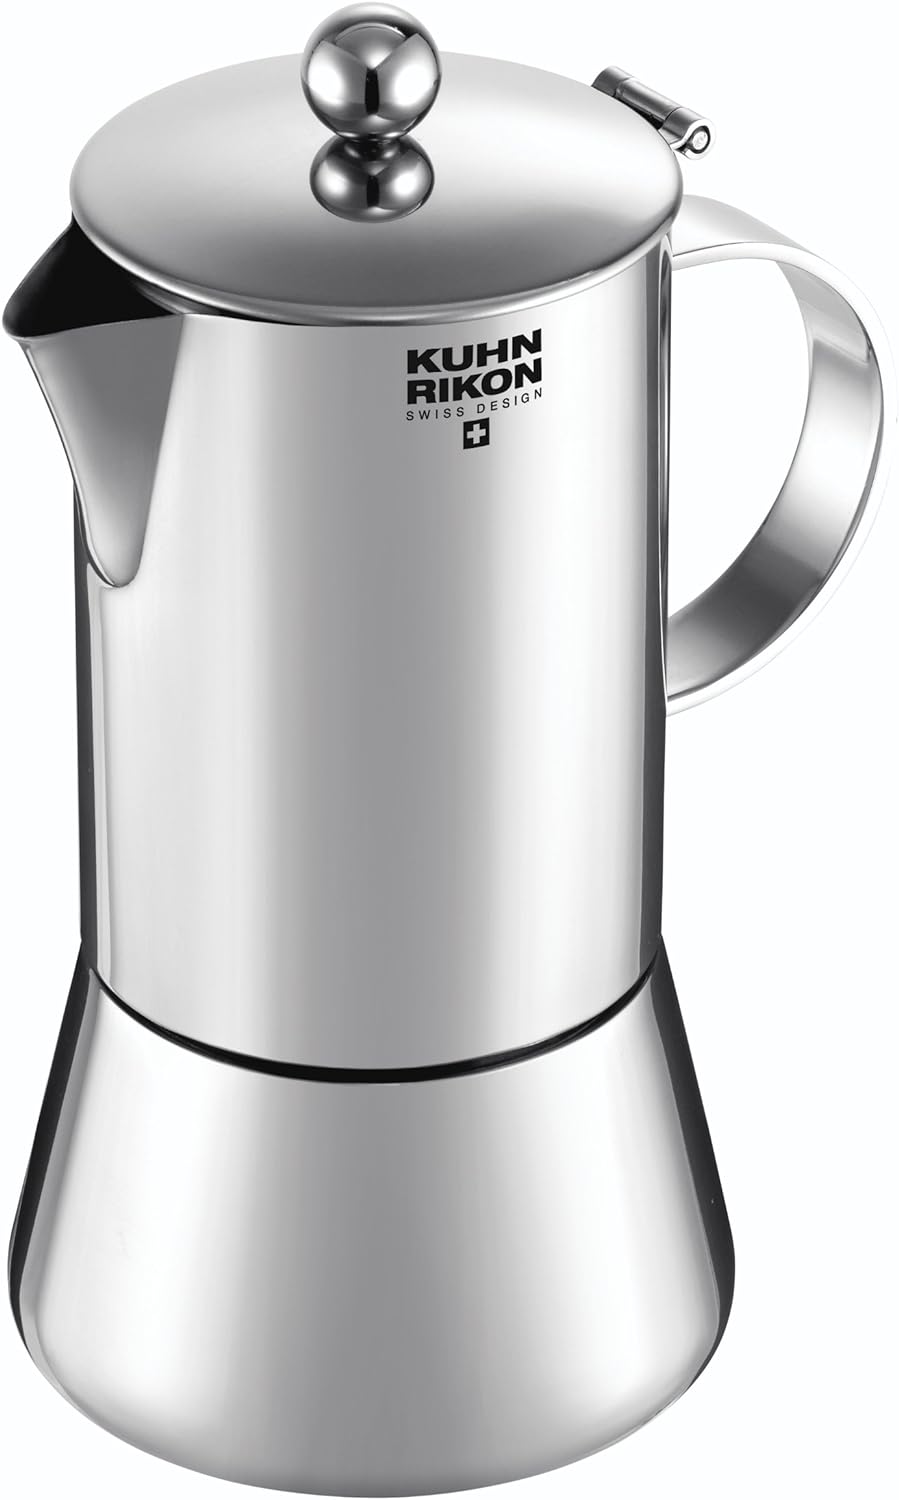 Kuhn Rikon Juliette Espresso Maker Induction Centimeters